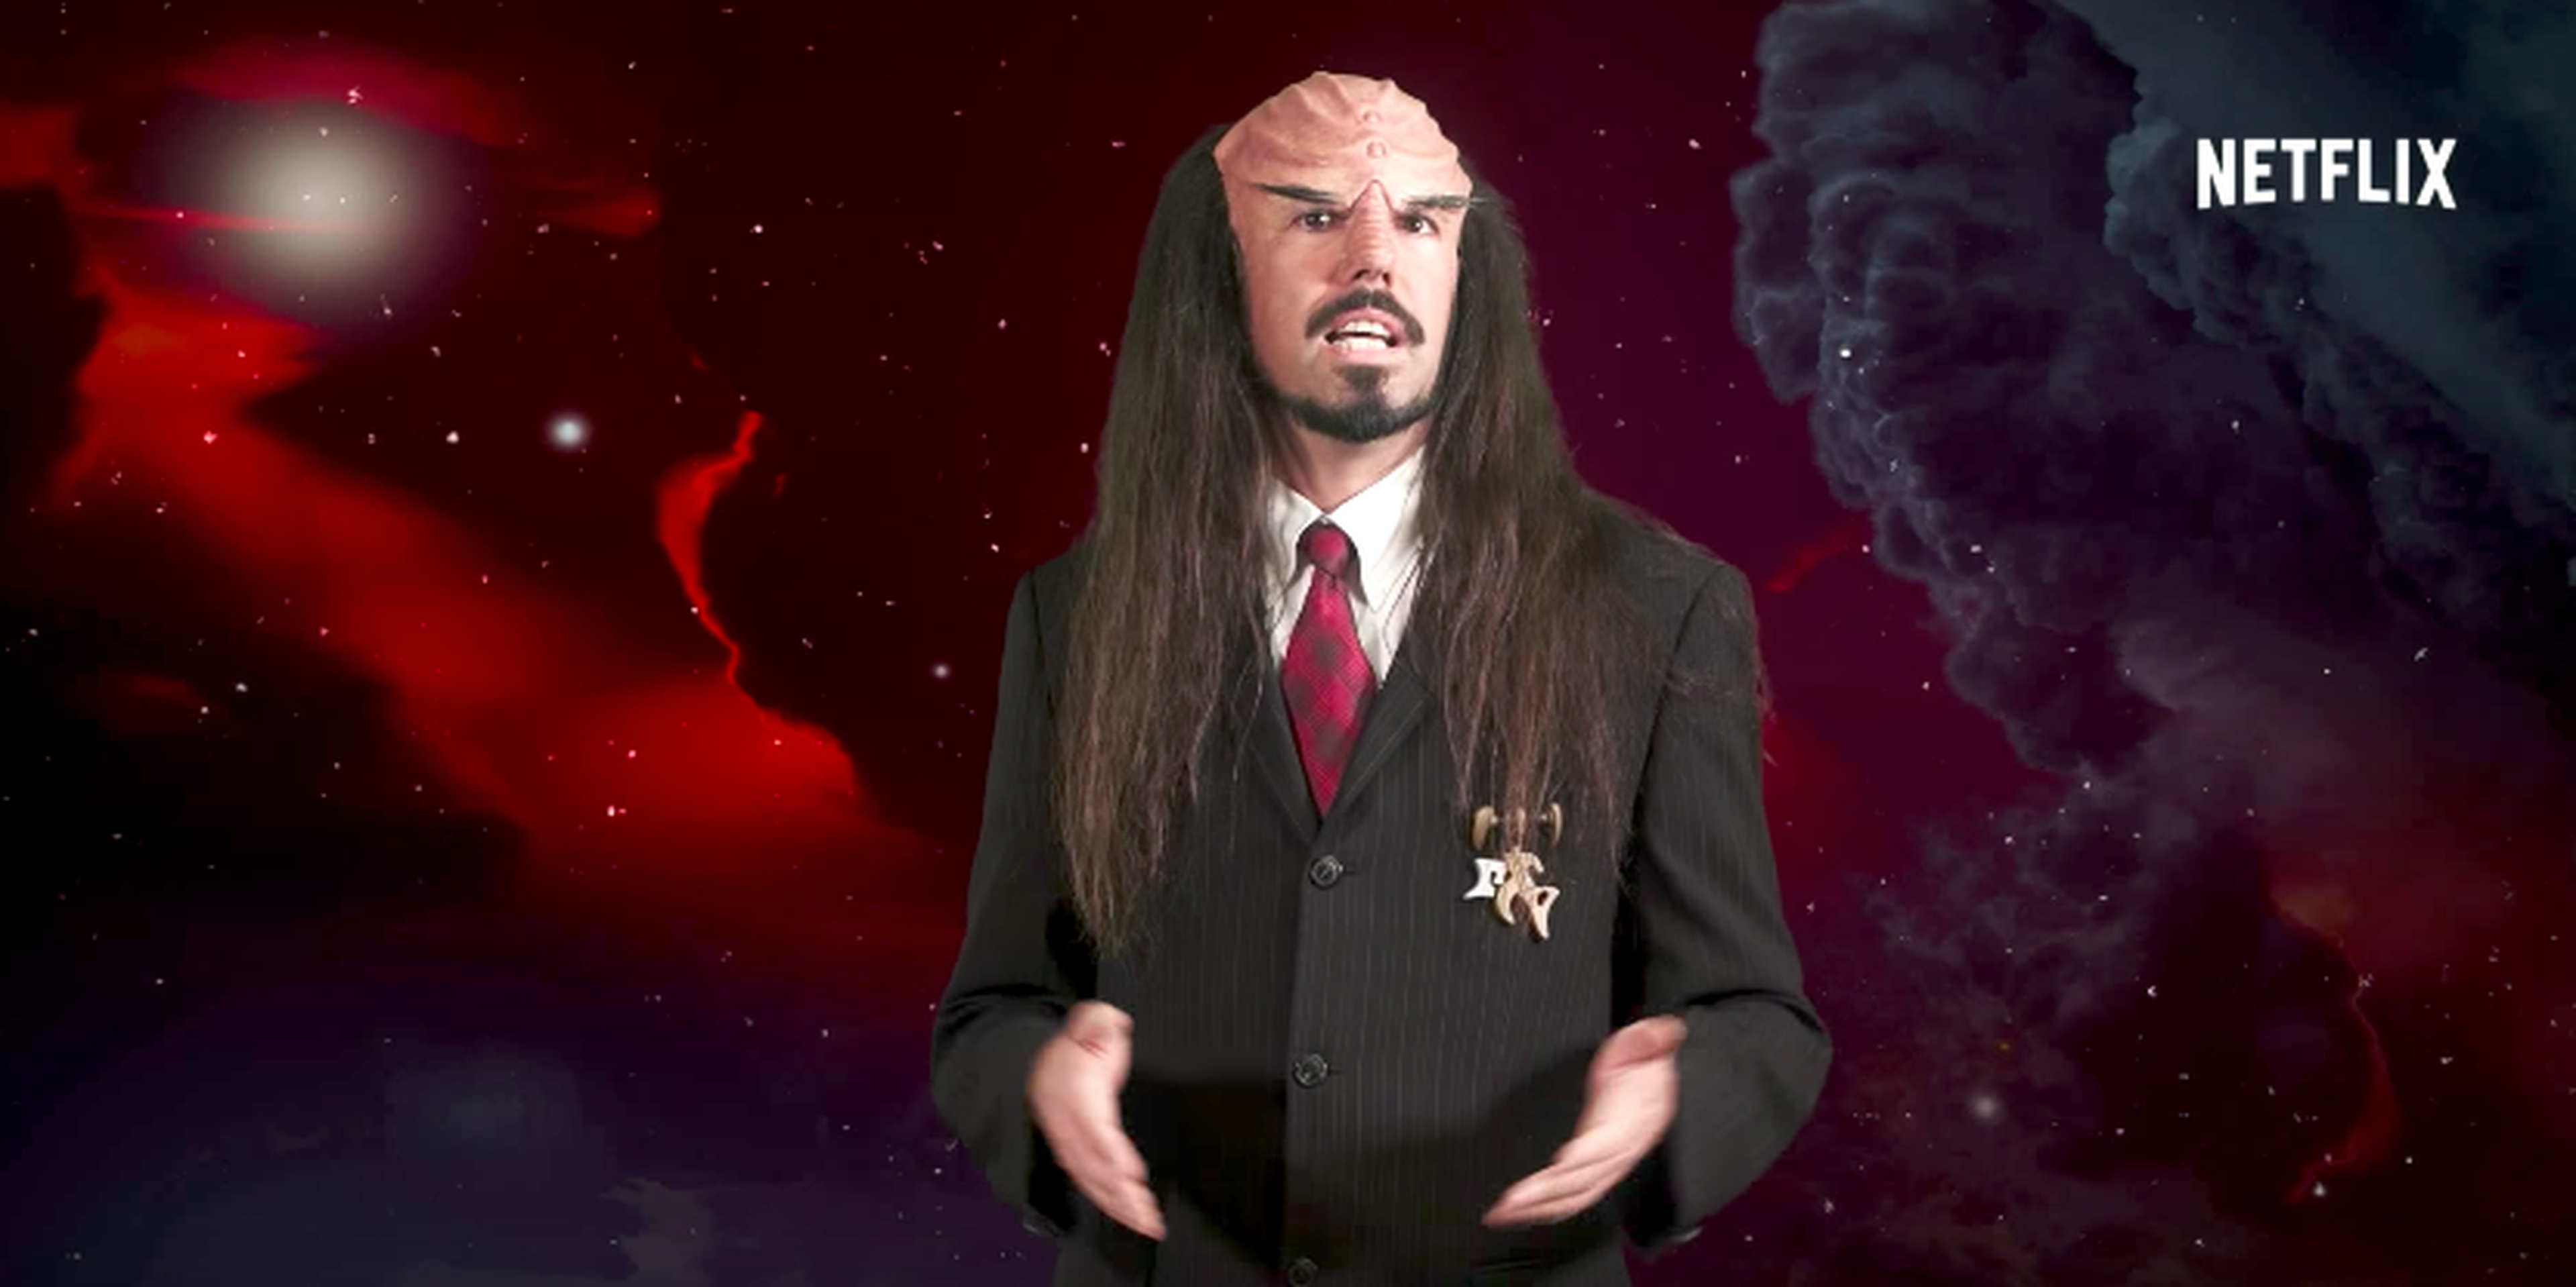 Aprende a usar Netflix al estilo Klingon